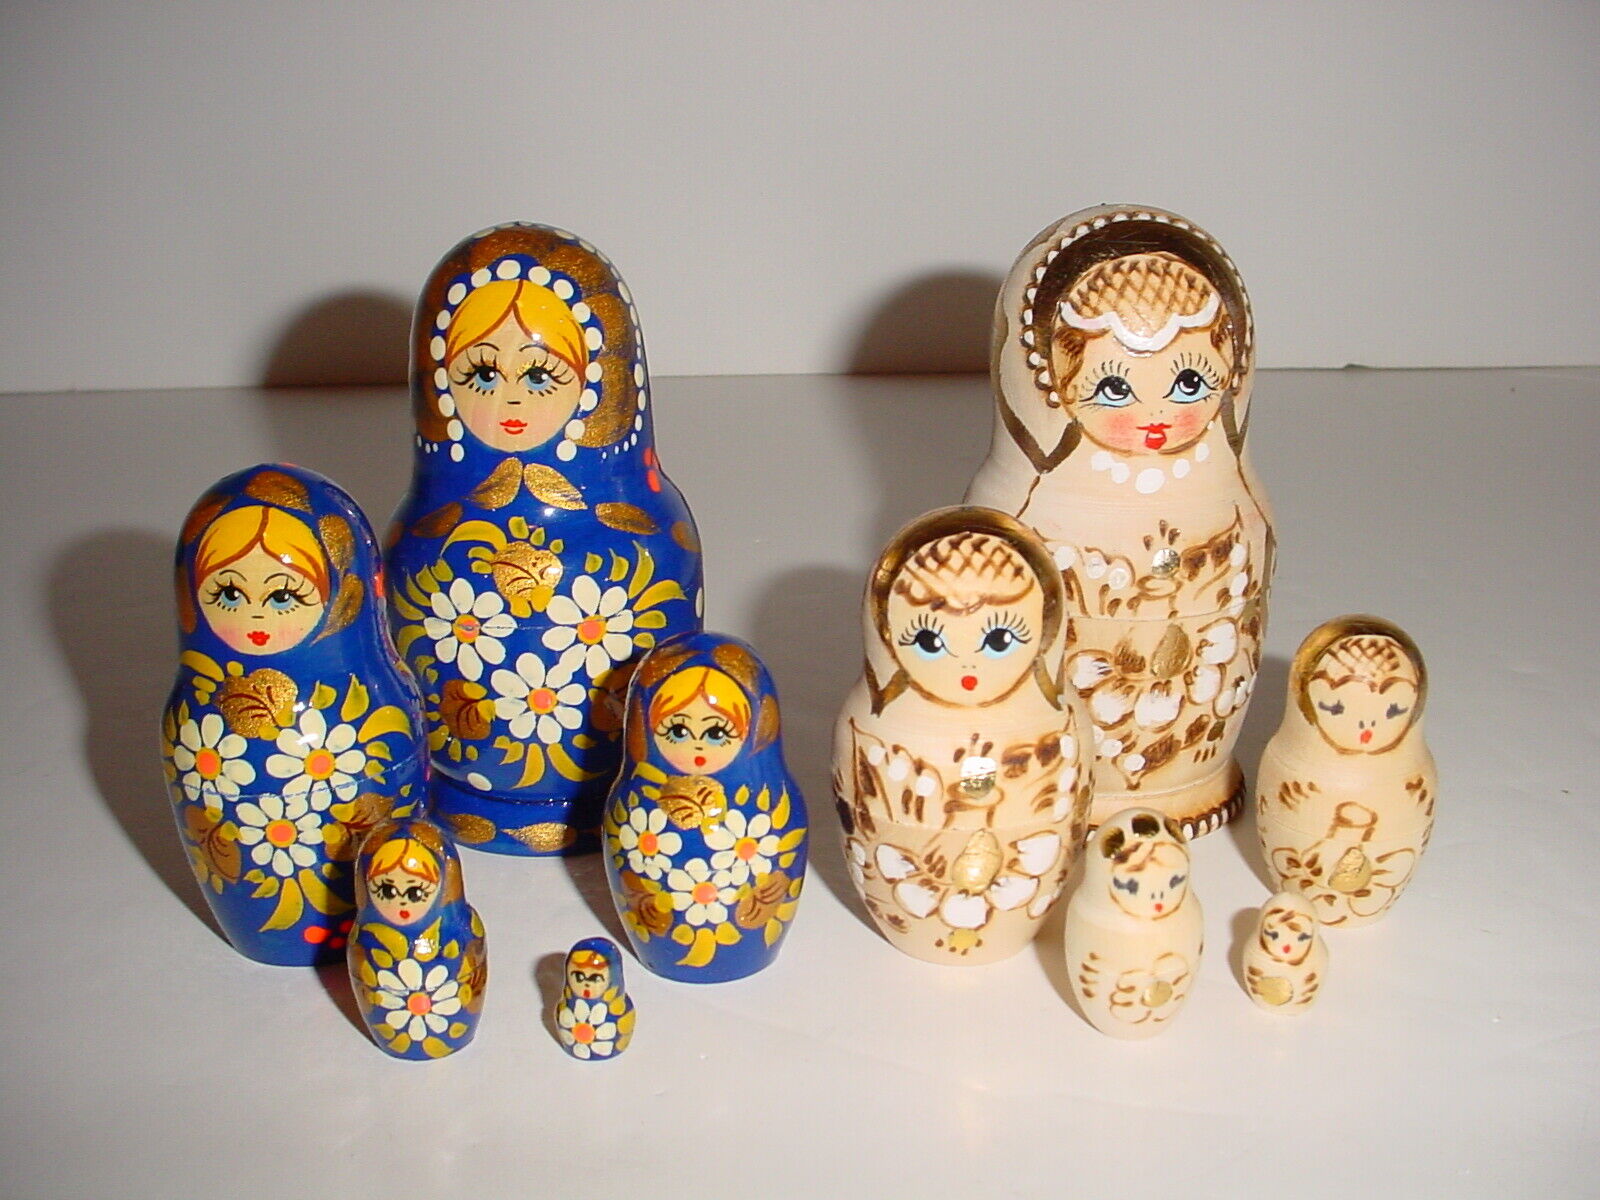 Lot 2 Sets Russian Matryoshka Nesting Dolls Gold Accents - 1 Natural Wood 1 Blue Unbranded